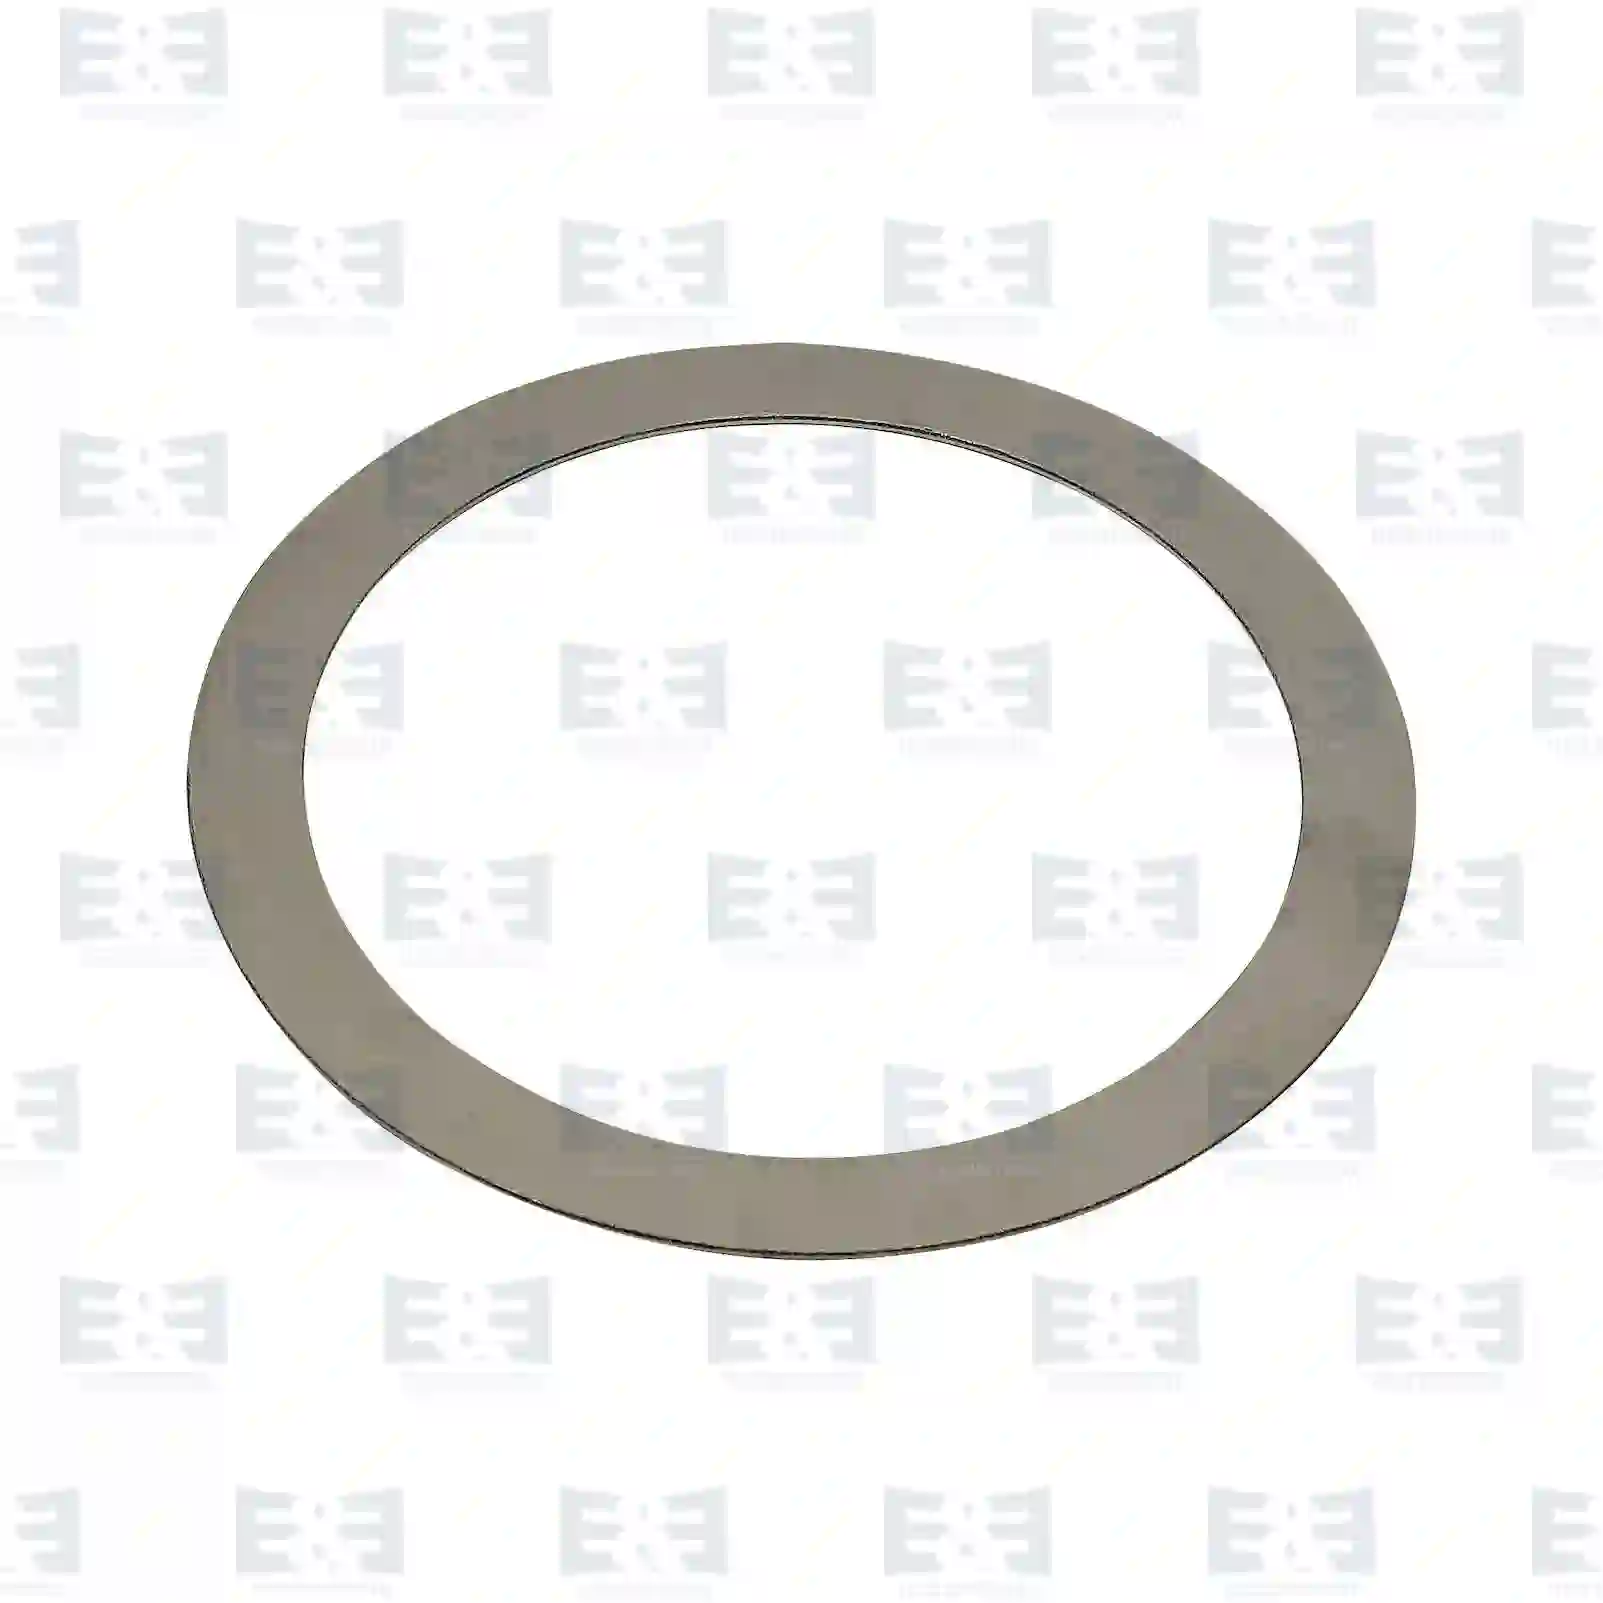  Wear ring || E&E Truck Spare Parts | Truck Spare Parts, Auotomotive Spare Parts